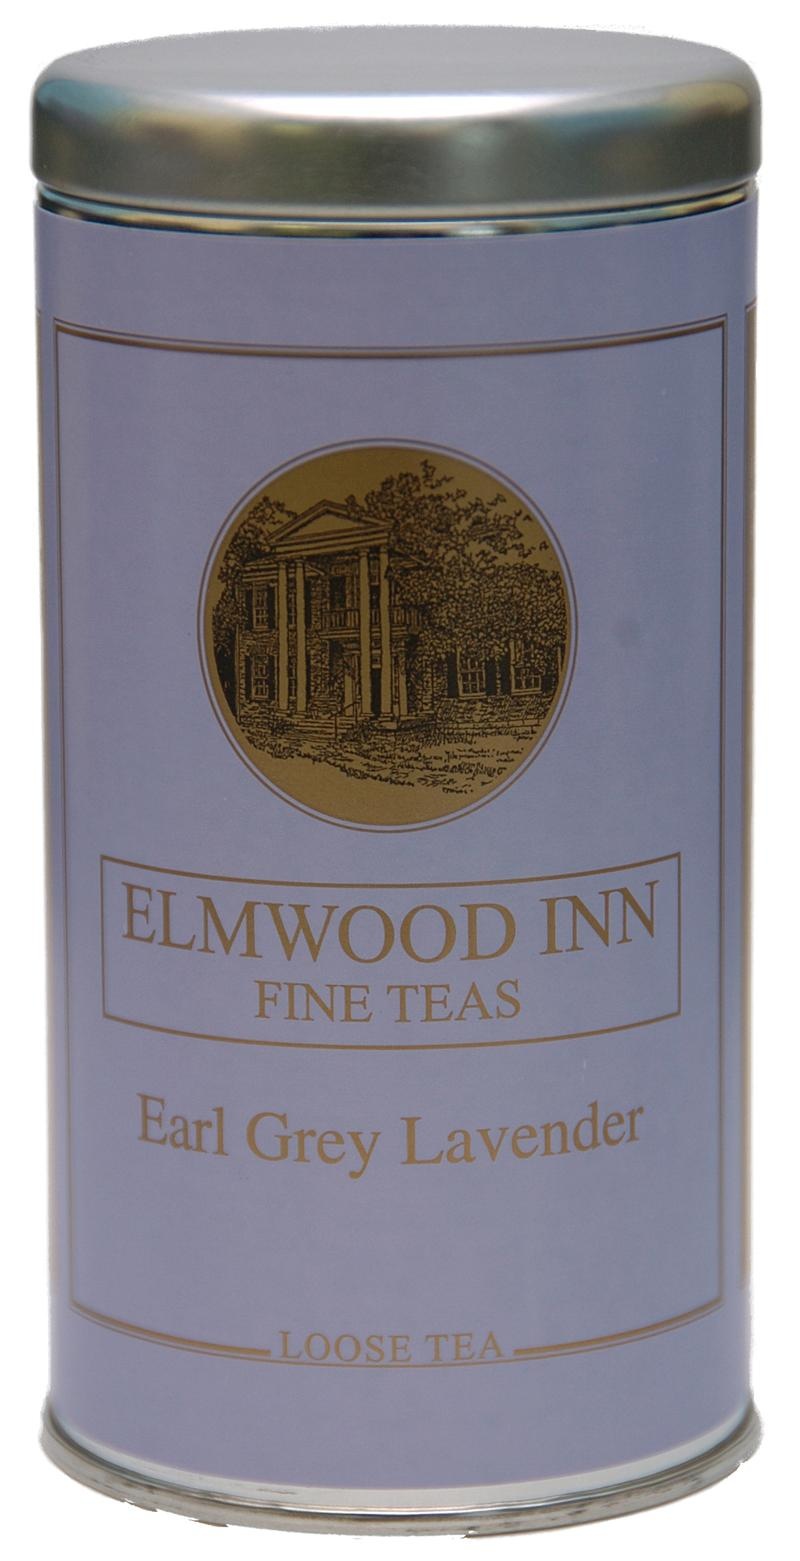 ELMWOOD INN EARL GREY LAVENDER TEA-2